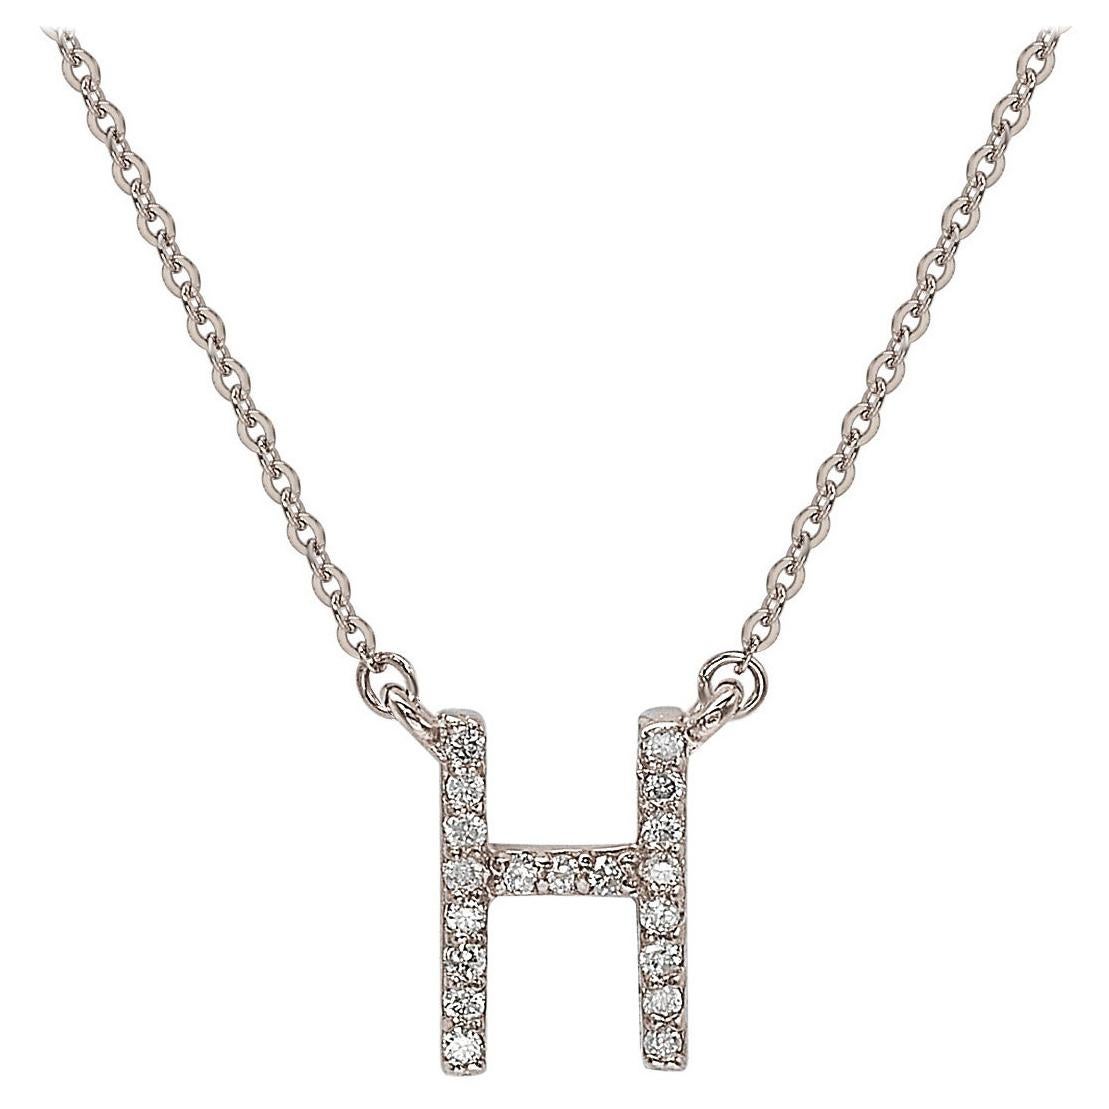 Suzy Levian 0.10 Carat White Diamond 14K White Gold Letter Initial Necklace, H